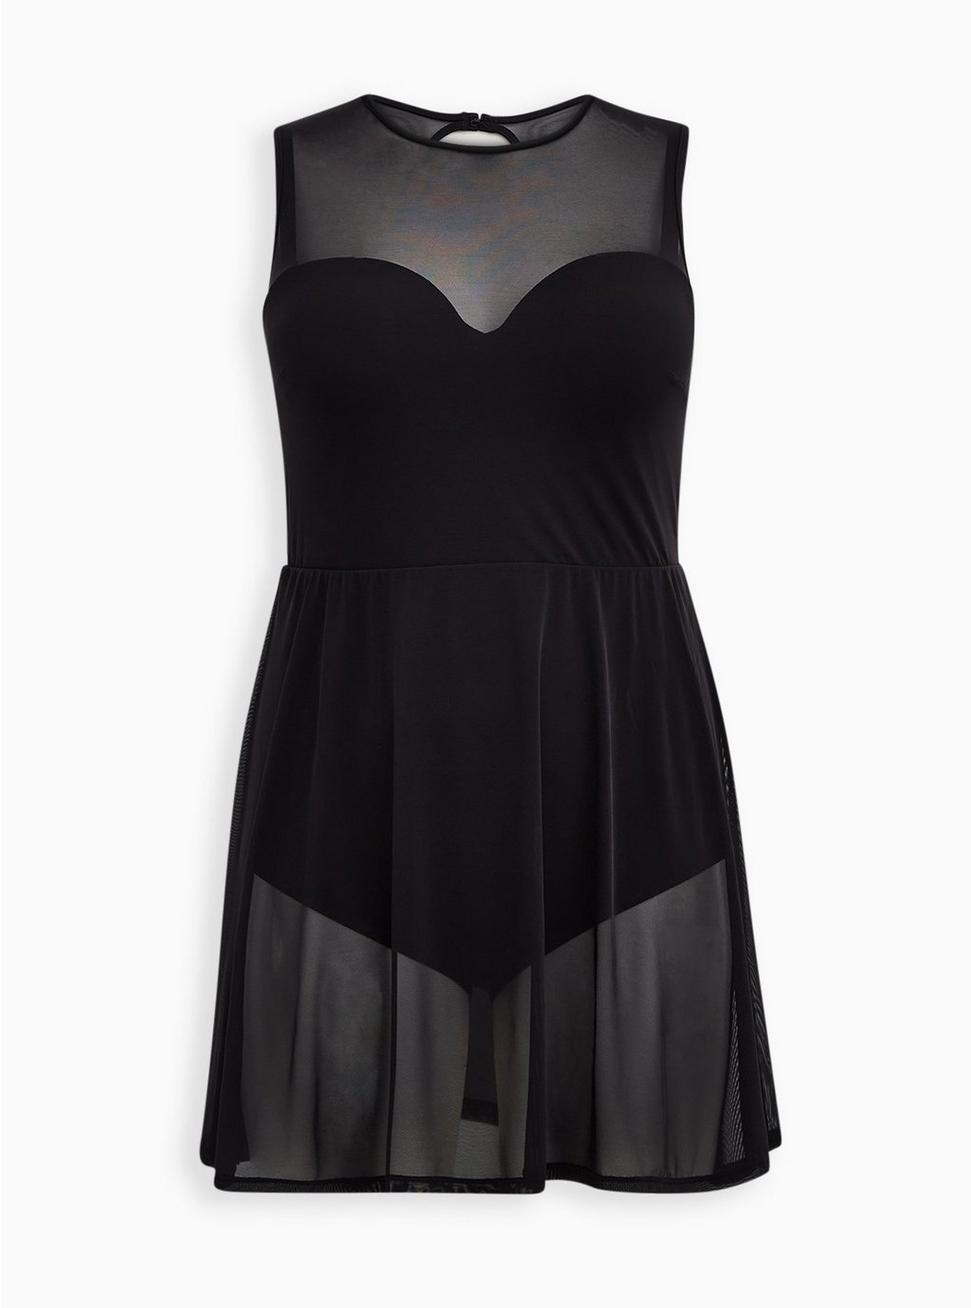 Plus Size Underwire Long Mesh Overlay Swim Dress With Brief, DEEP BLACK, hi-res